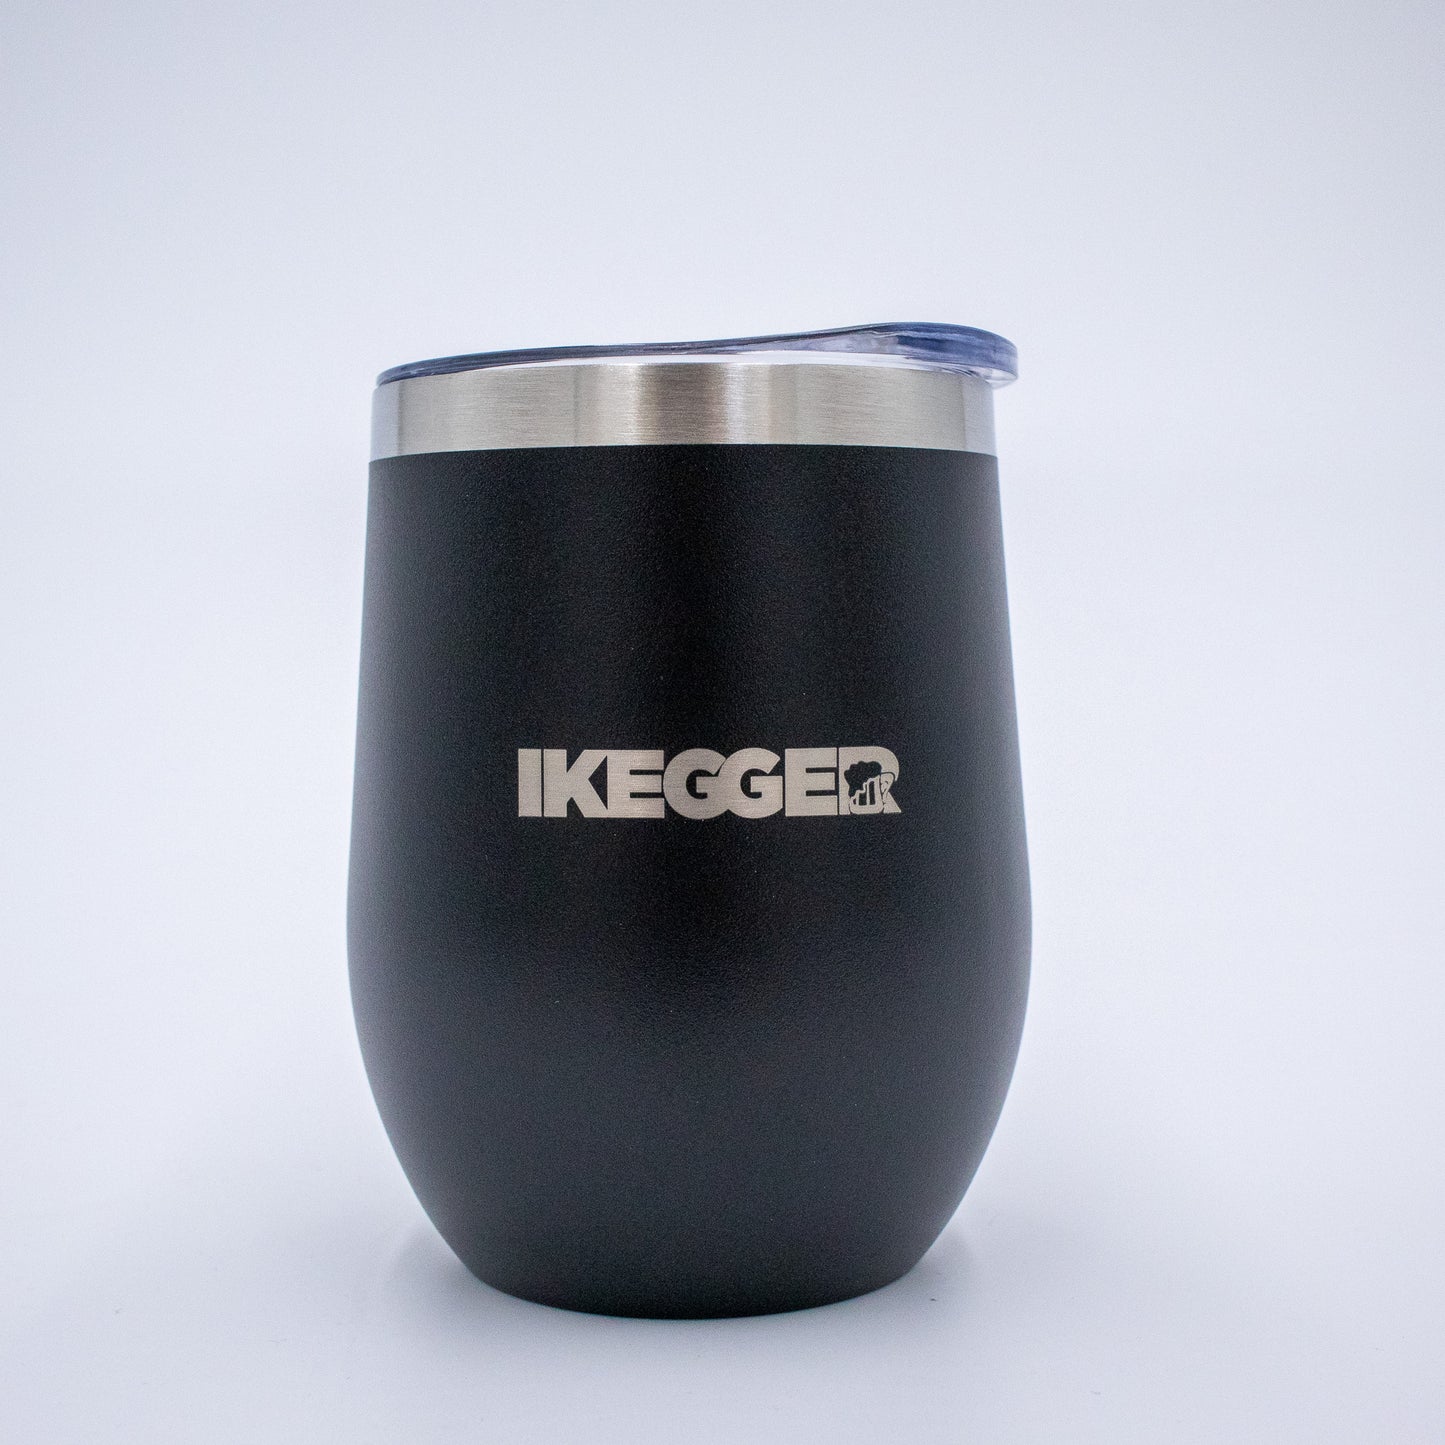 Ikegger merchandise